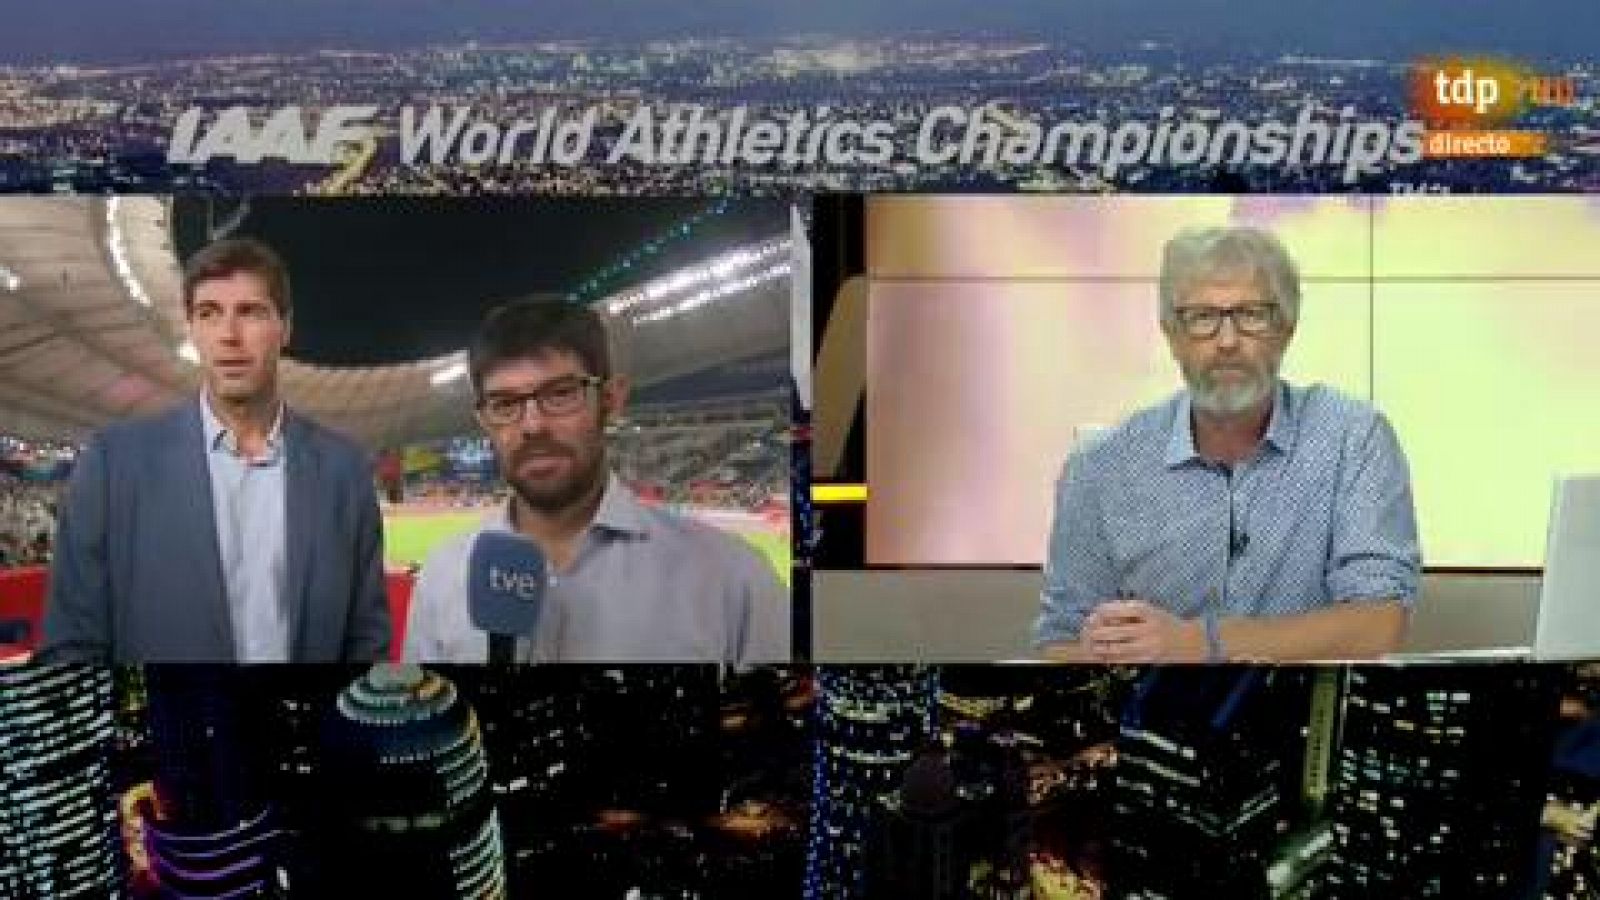 Mundial de atletismo | Rául Chapado: "Ha sido un Mundial con un nivel altísimo"